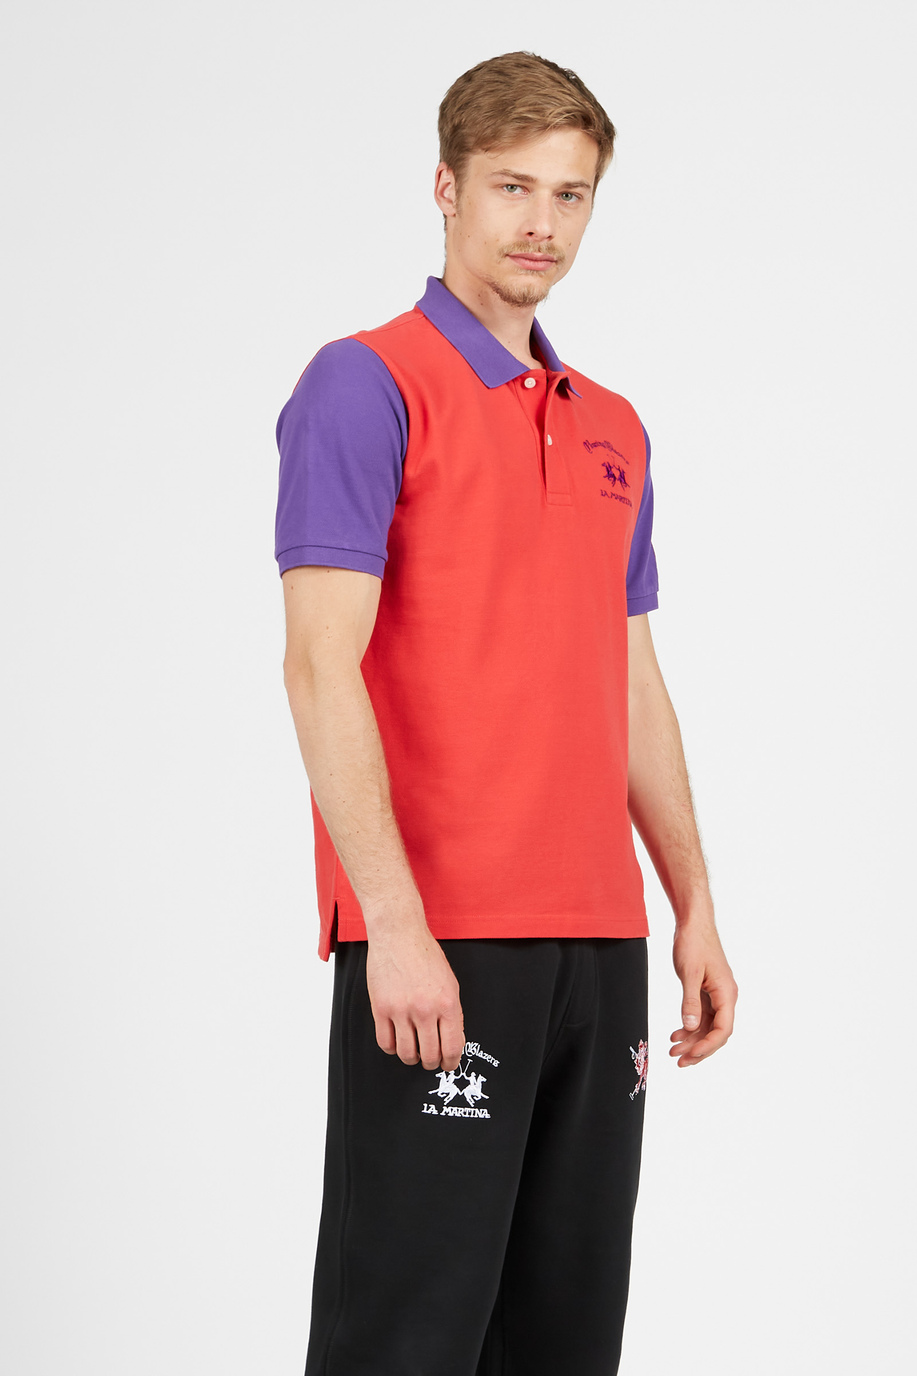 Comfort fit short-sleeved polo shirt - test 2 | La Martina - Official Online Shop